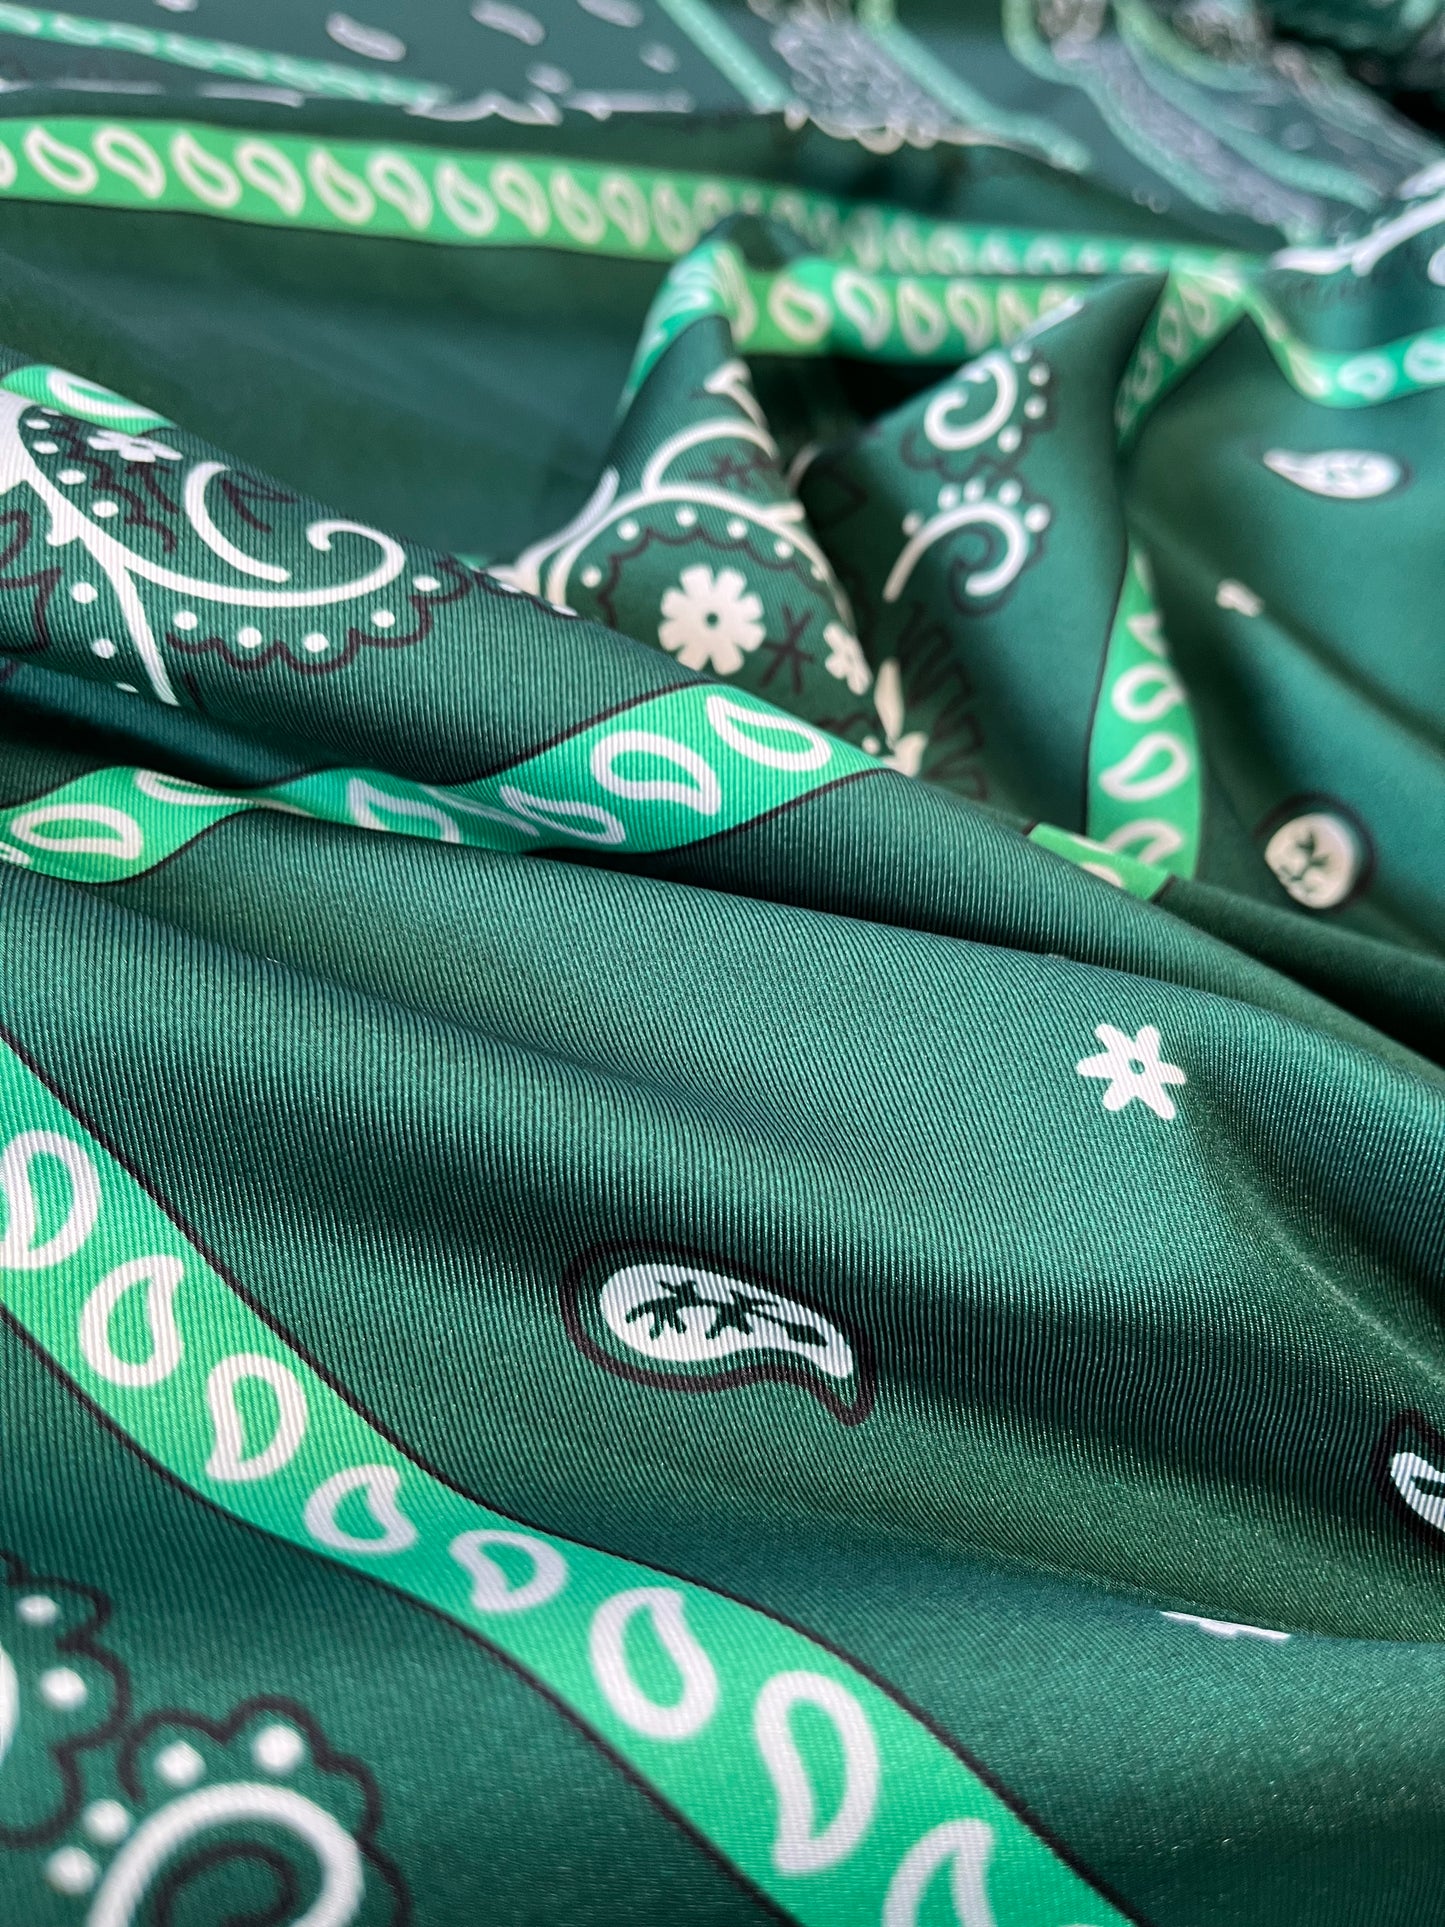 A01 ND 016 twill with green foulard